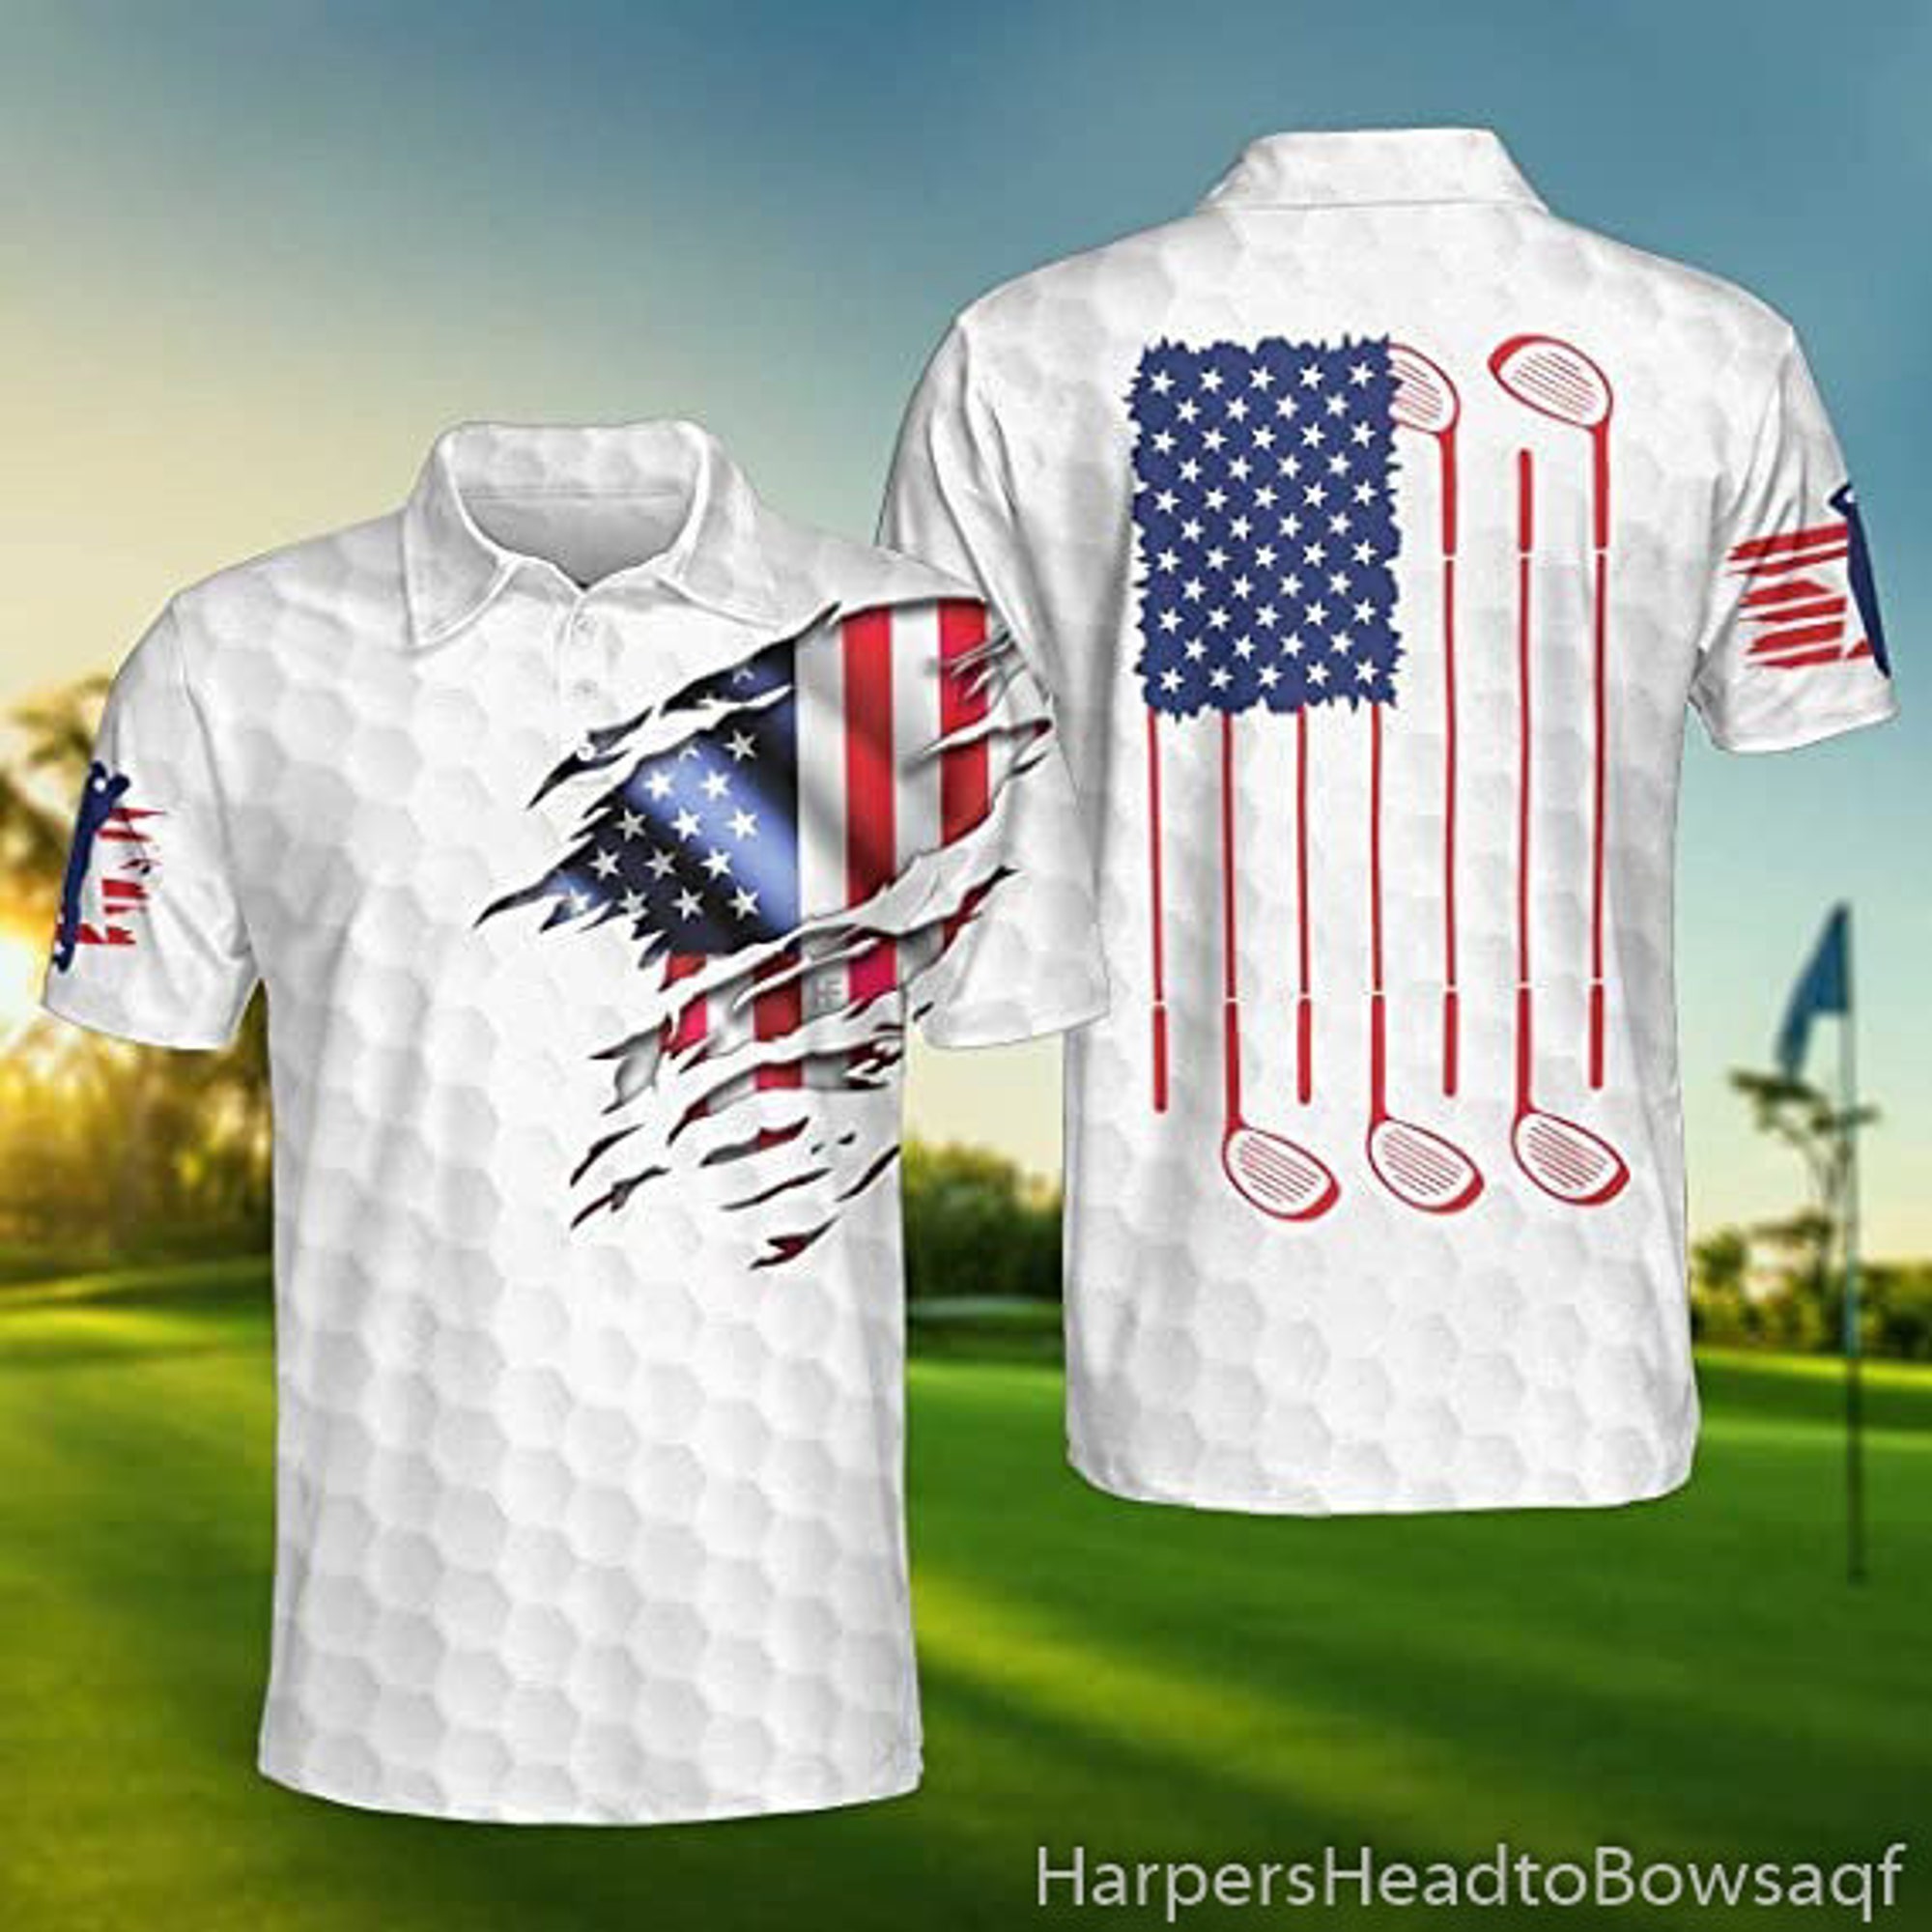 US Golf Polo Shirt for Men American Flag Design- Golf American Polo Shirt- Patriotic American Flag Golf Polos Shirt